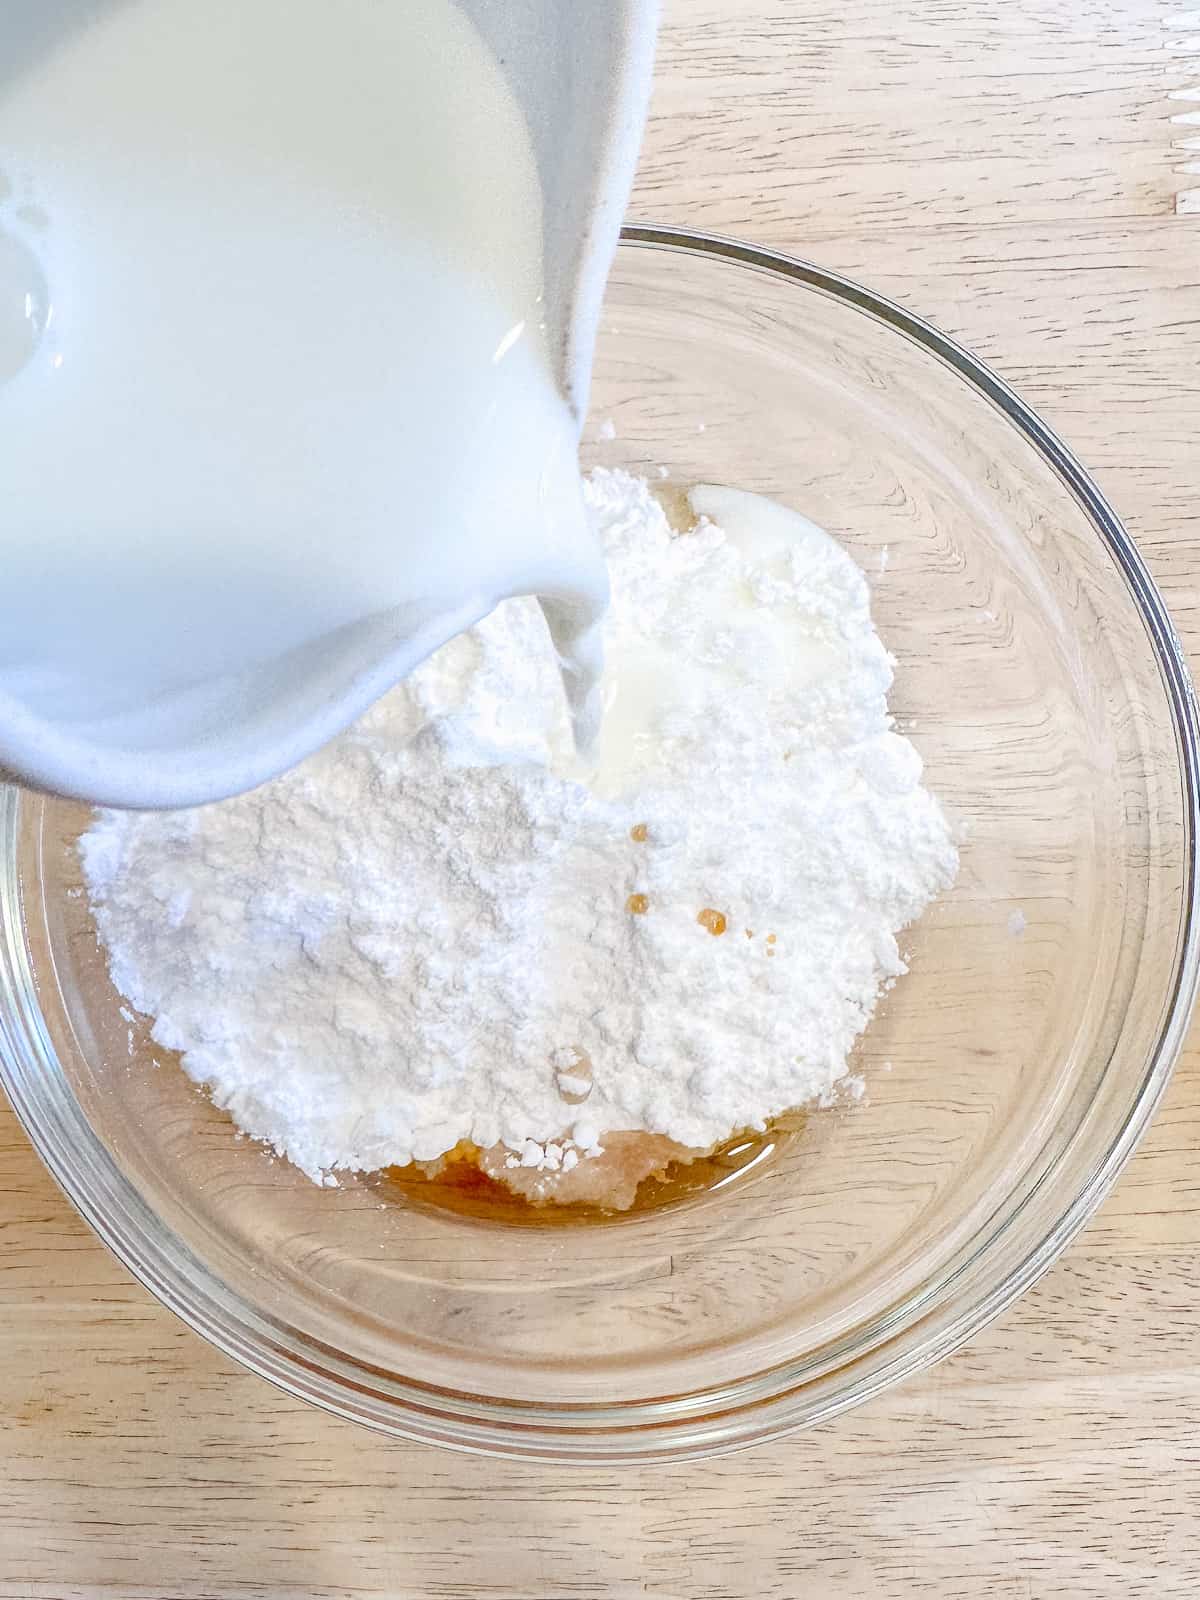 Pouring milk into powdered sugar to make glaze.